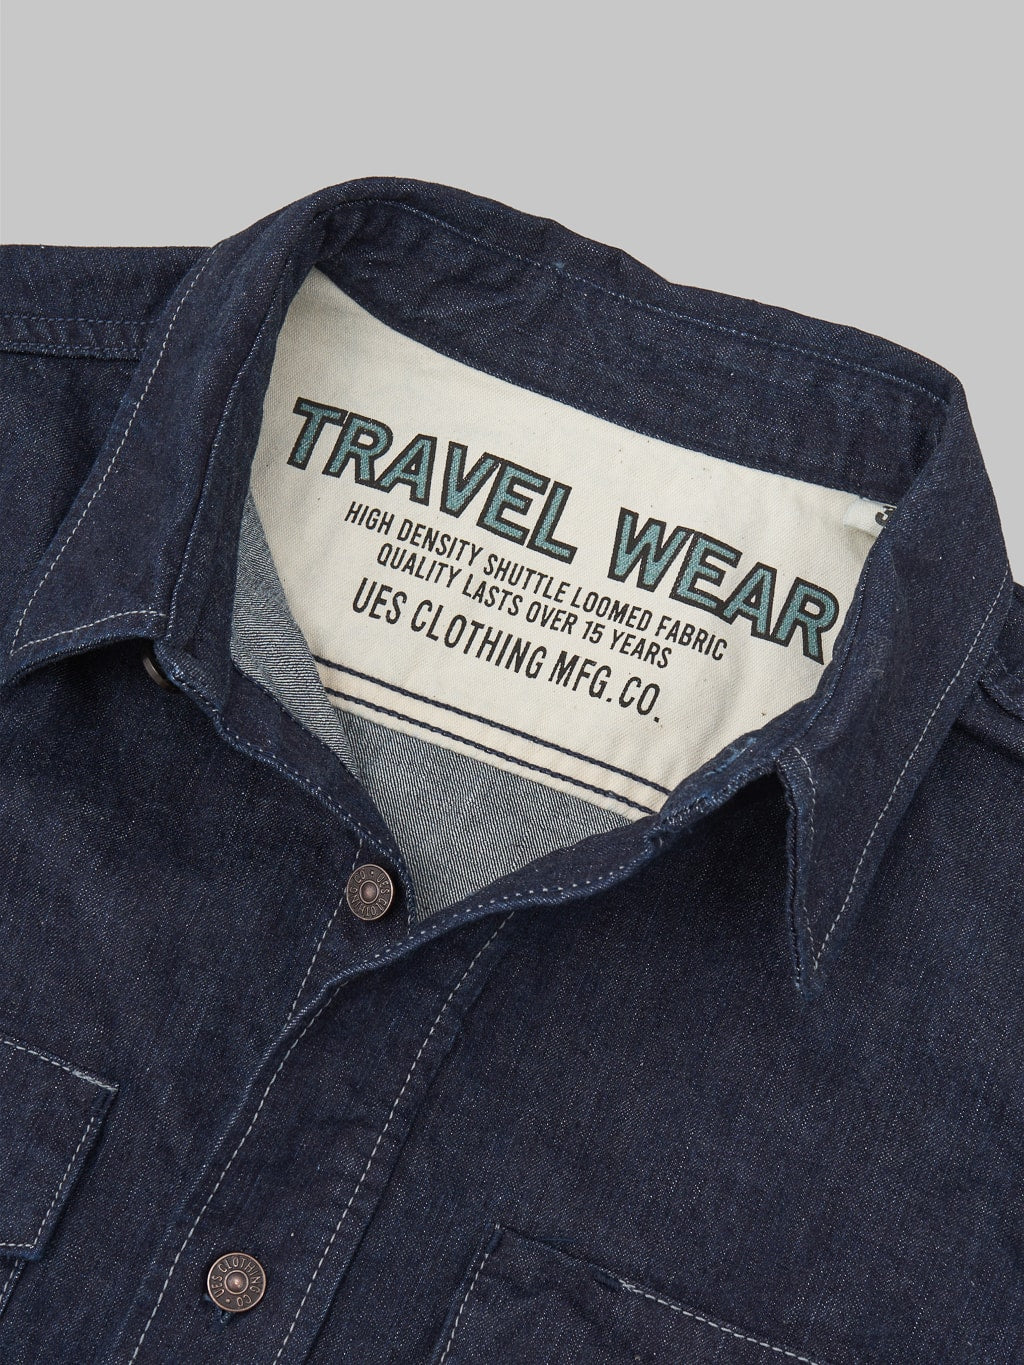 Ues Traveling Shirt Indigo selvedge denim brand tag interior